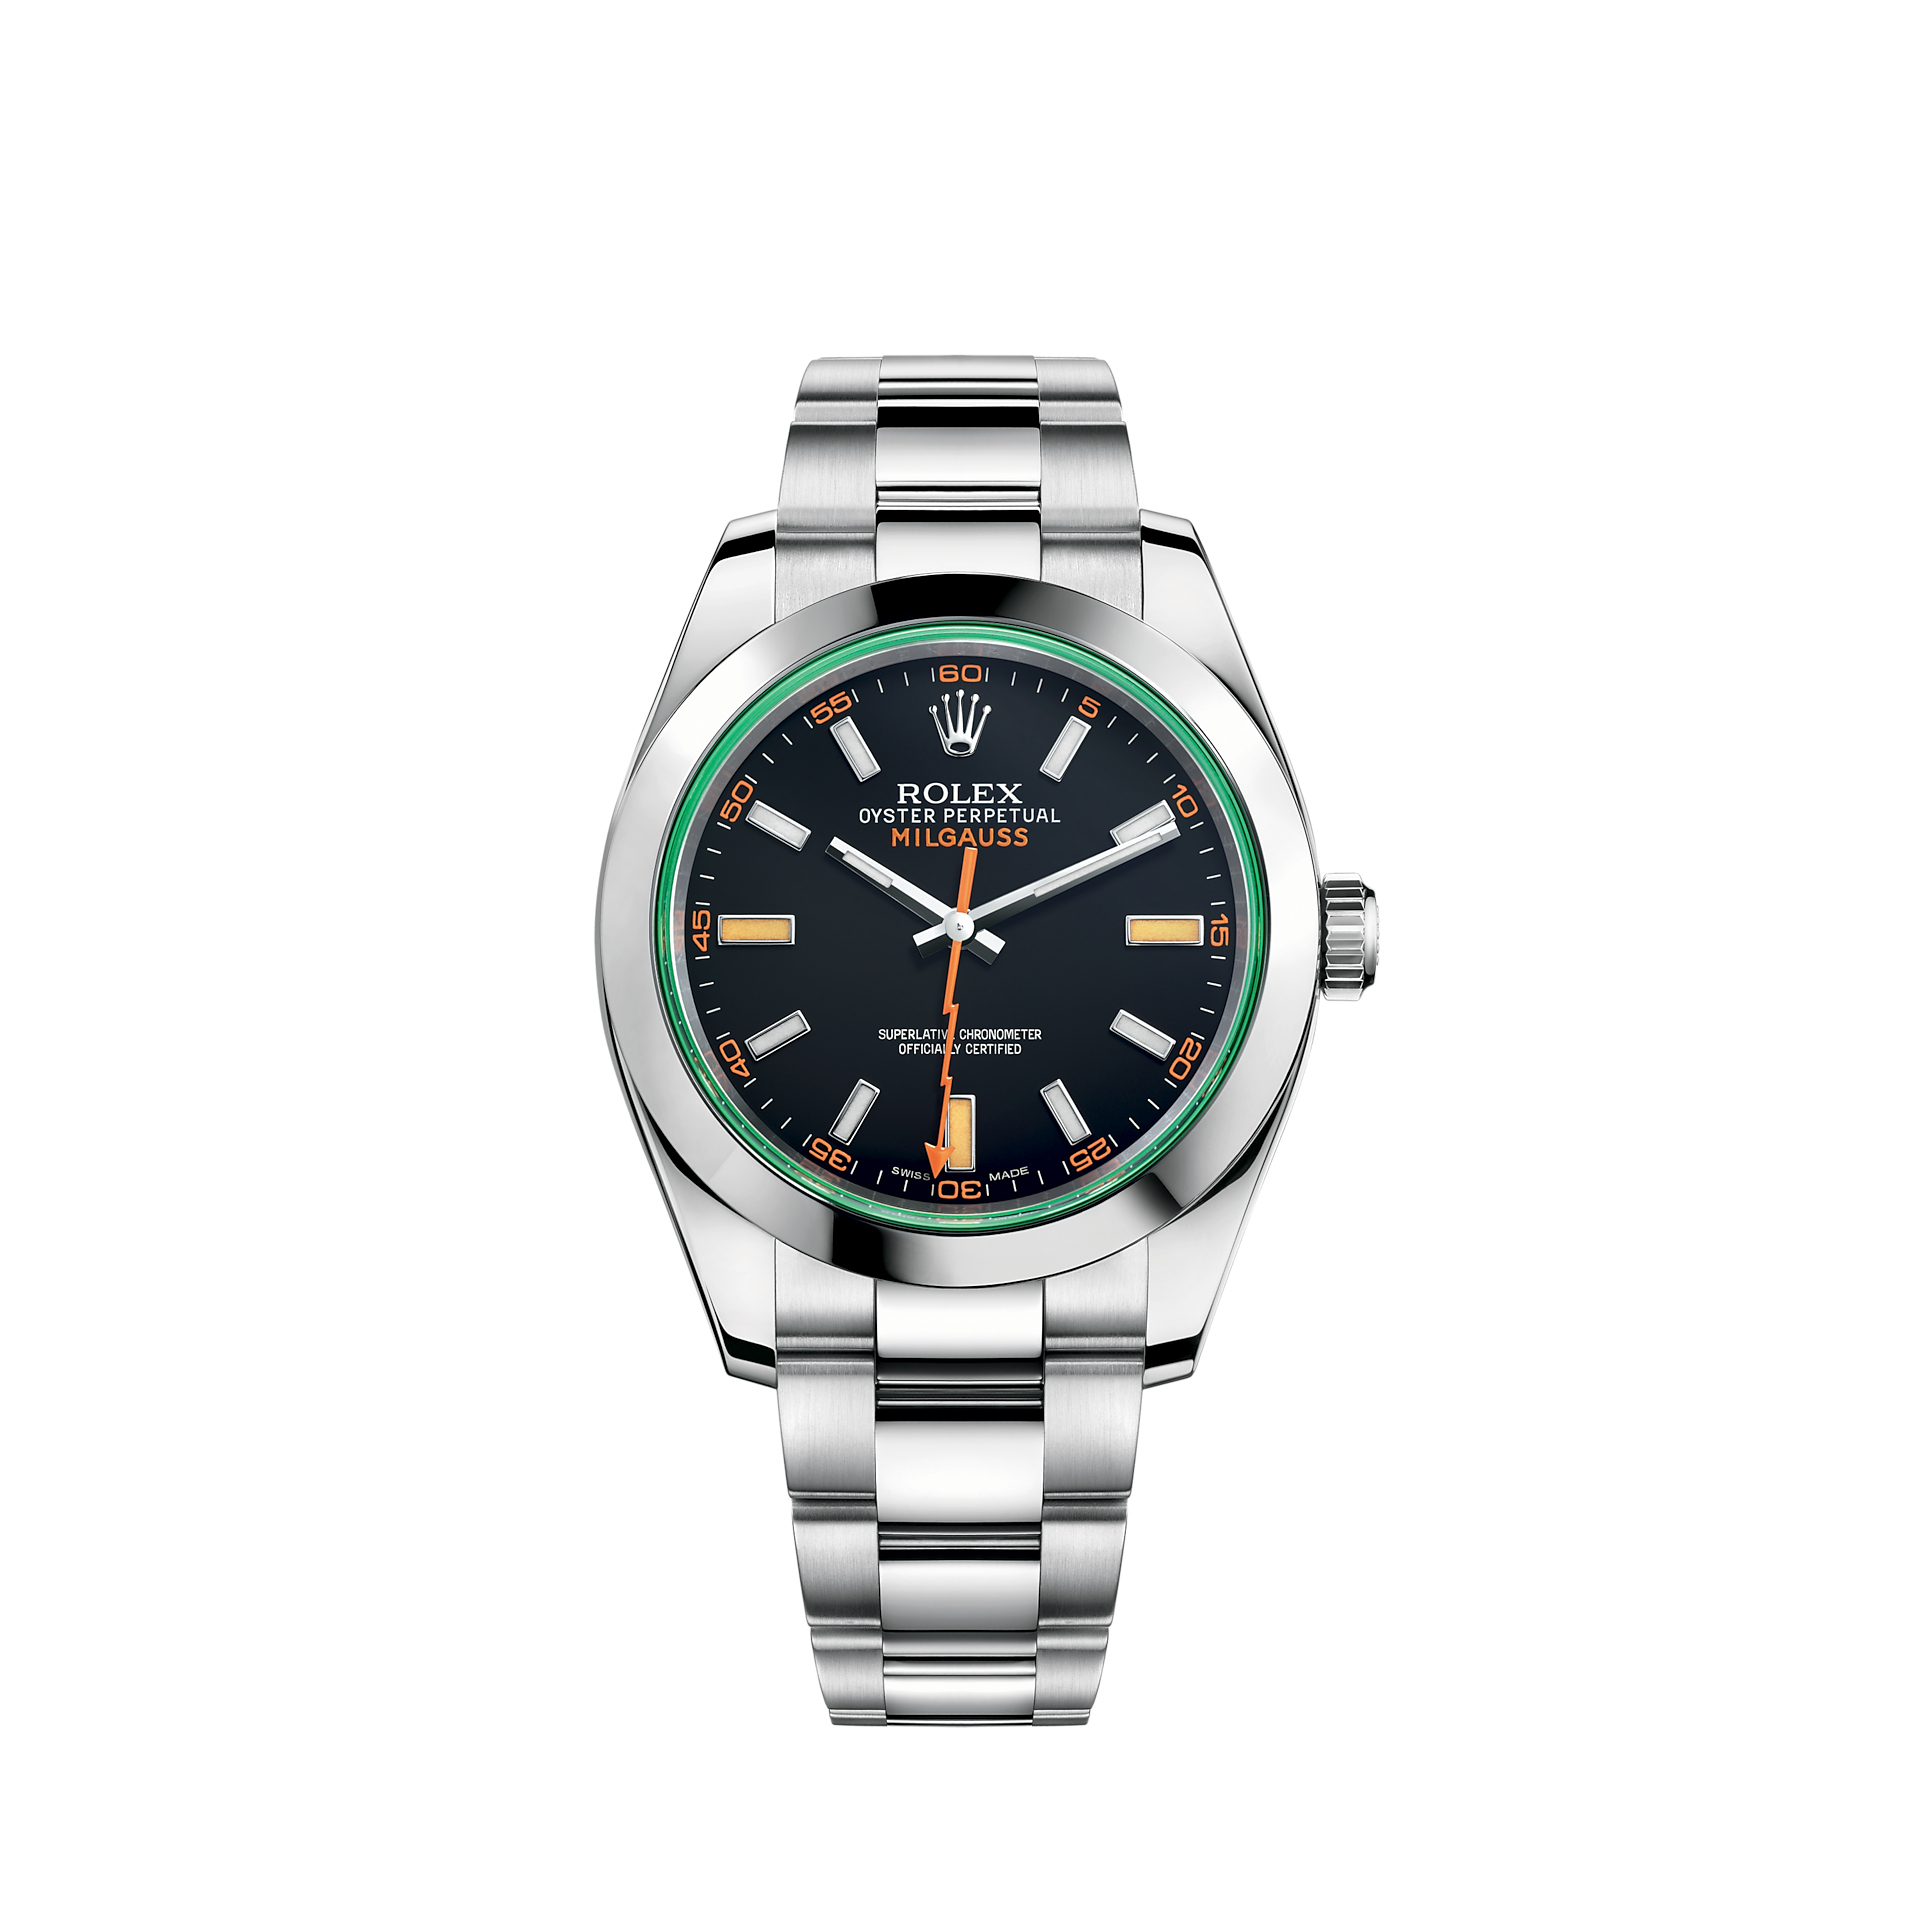 Reloj Rolex acero Oystersteel - M116400GV-0001